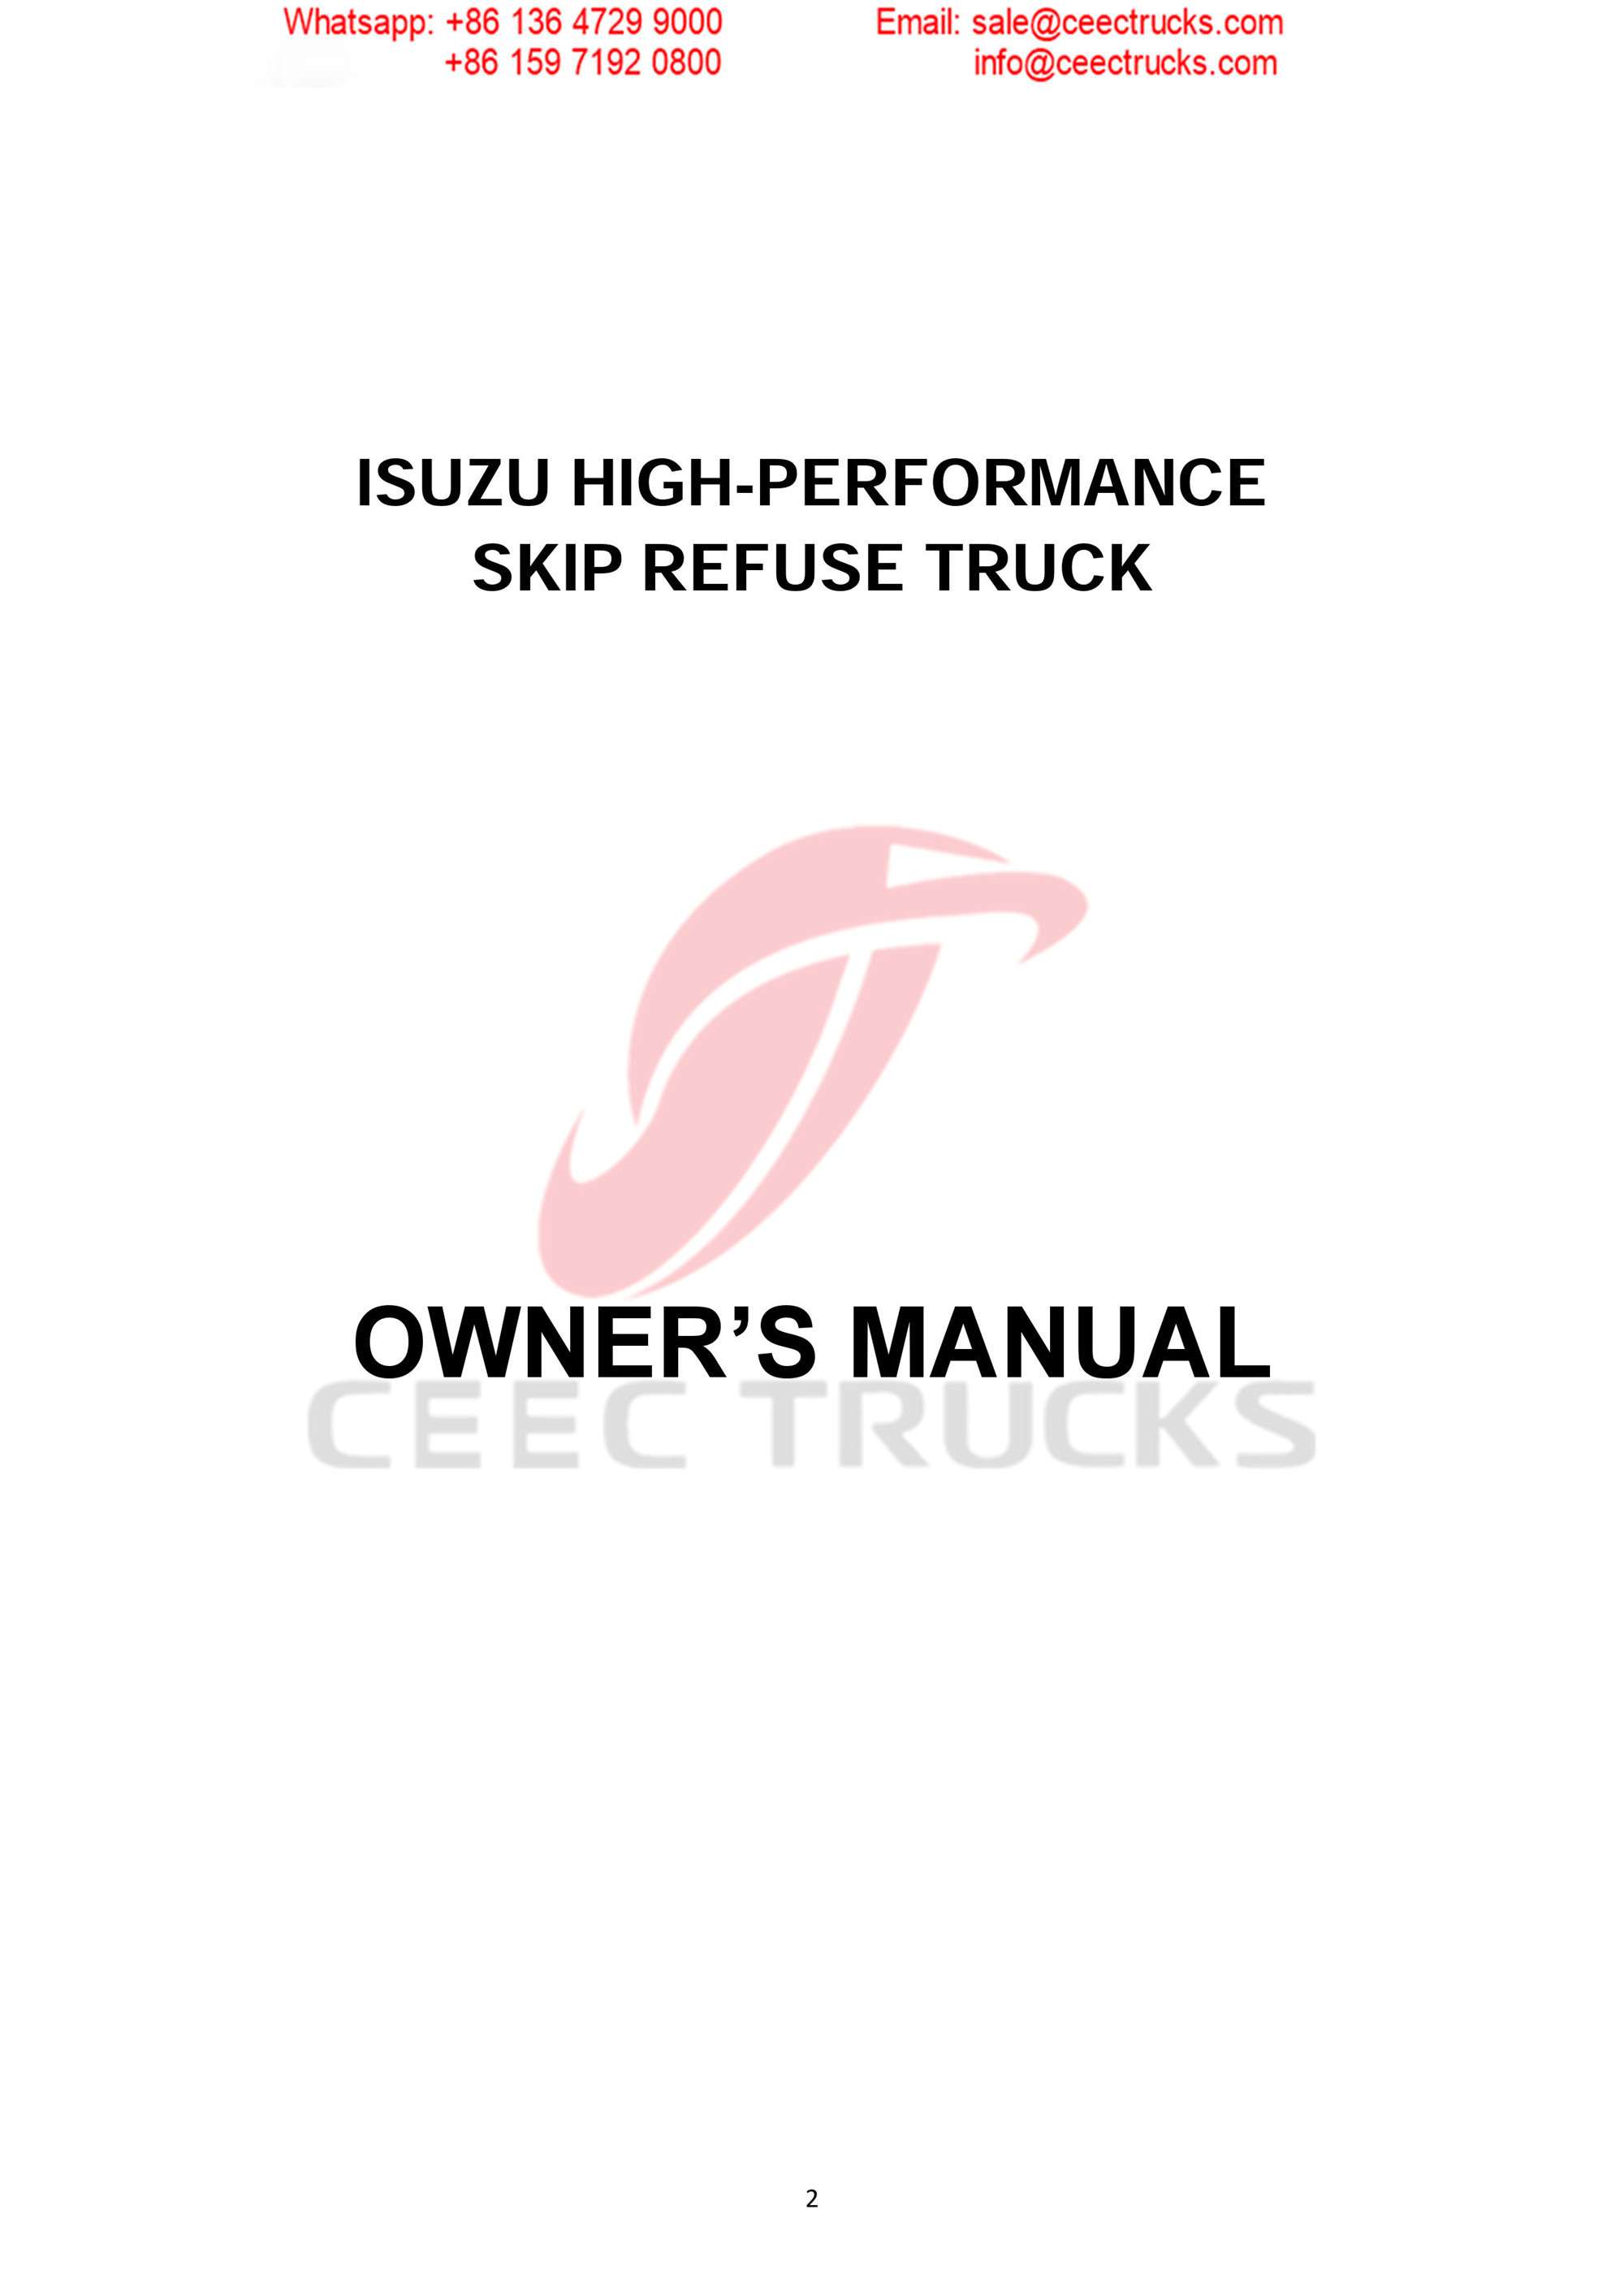 ISUZU 6CBM skip refuse truck Operation Manual